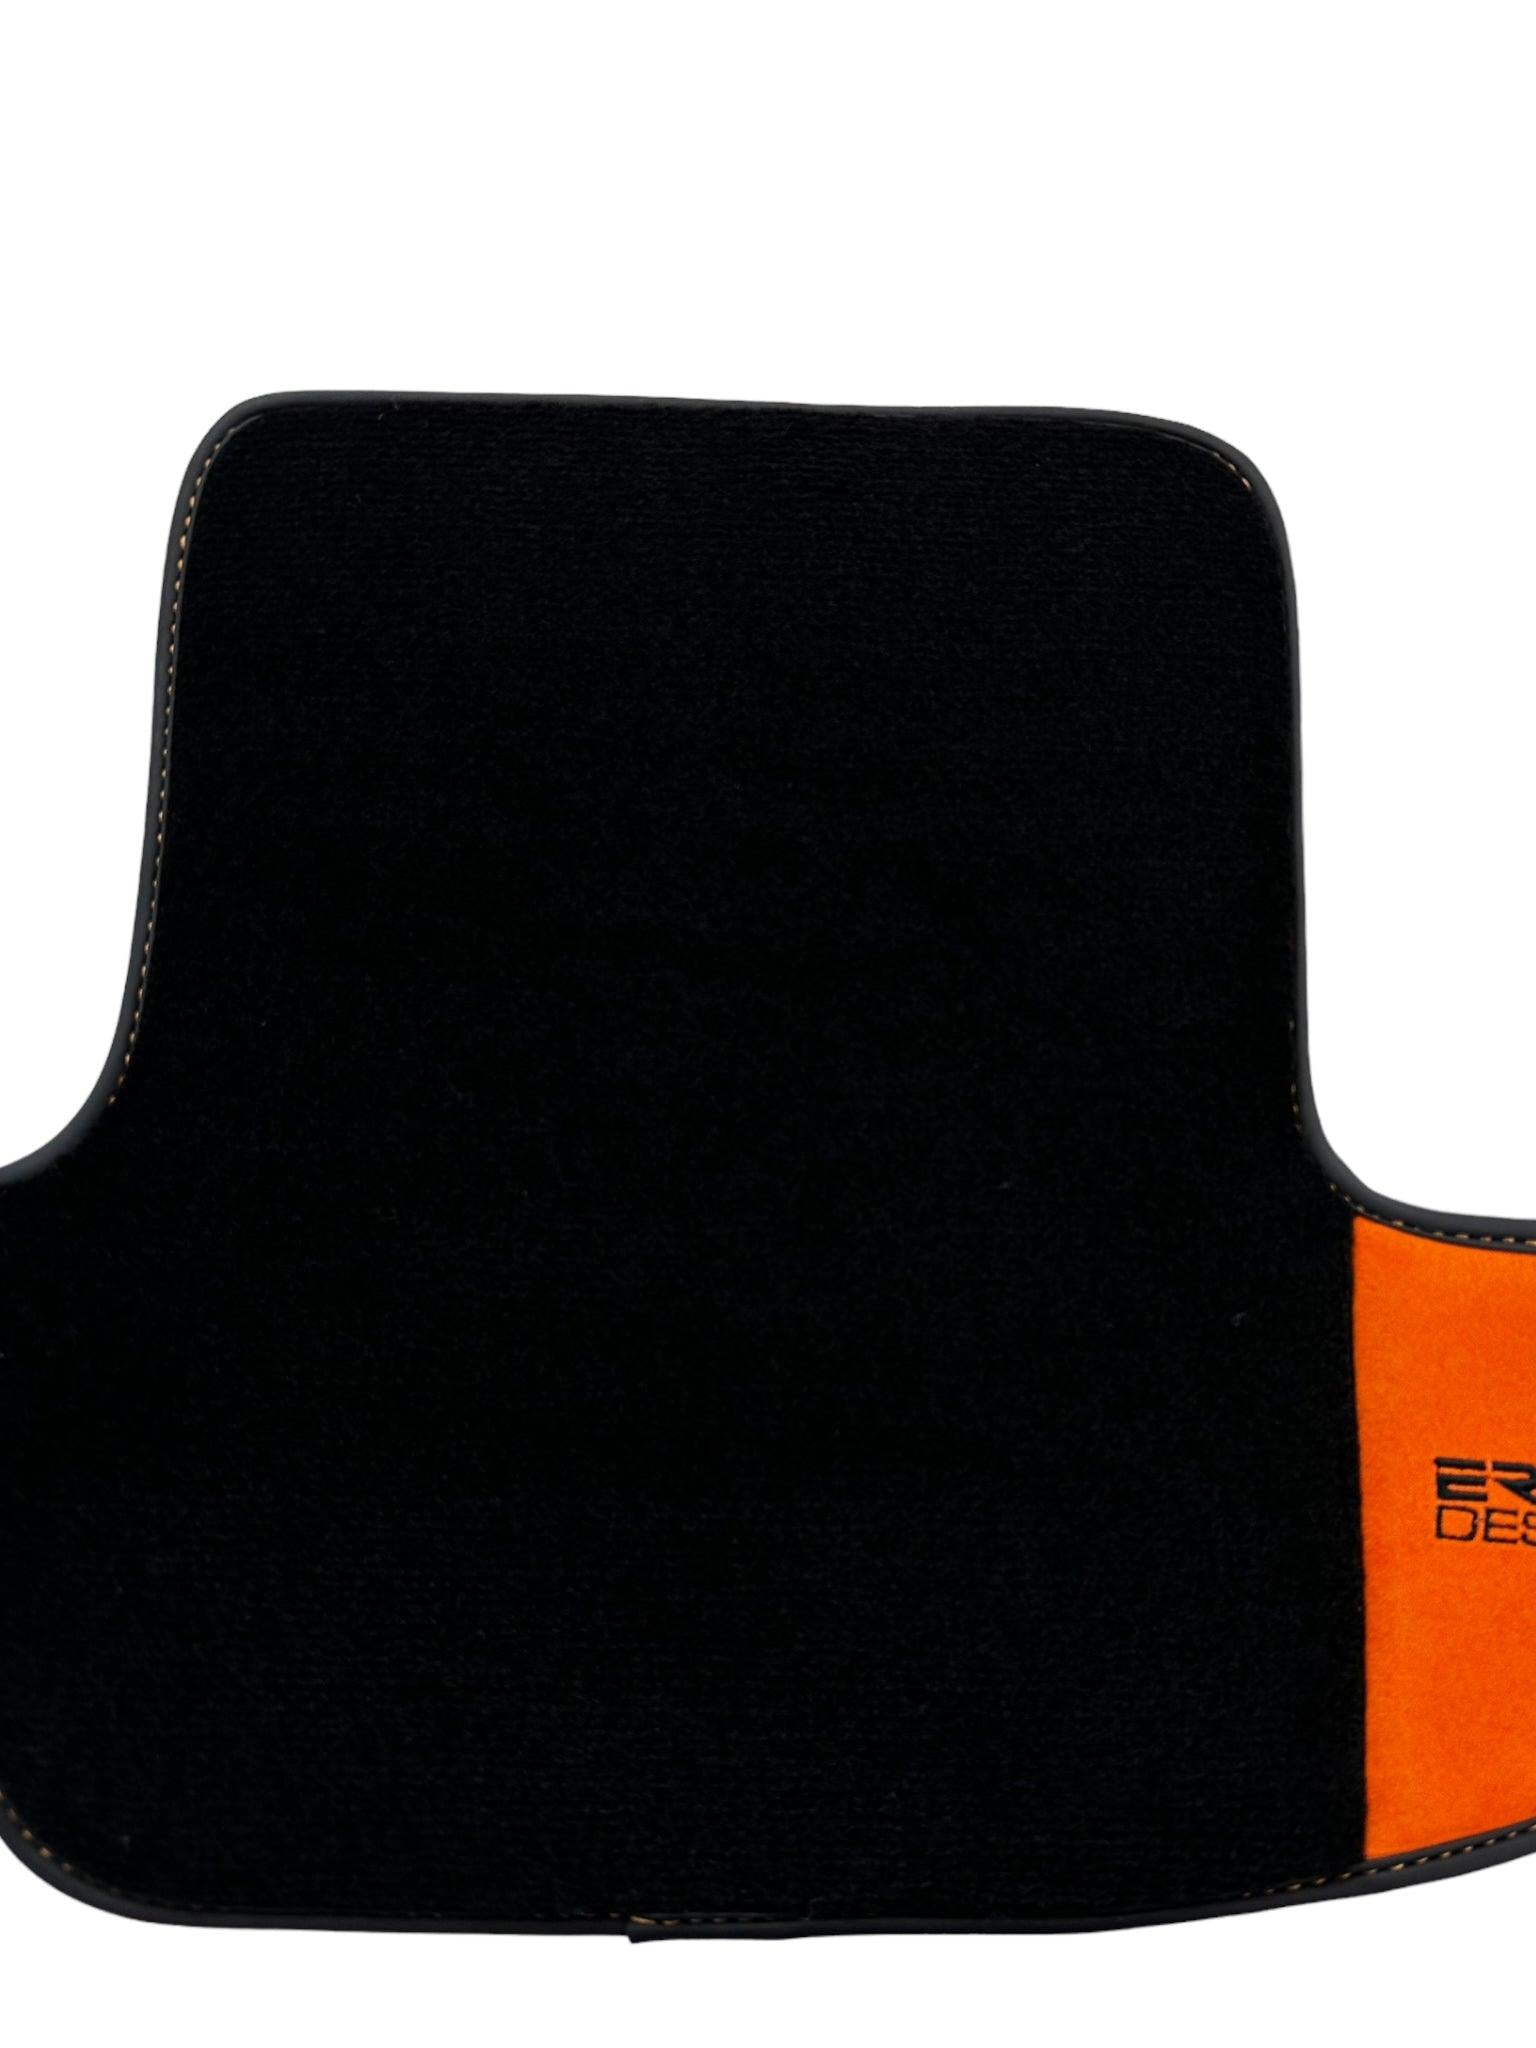 Black Floor Mats for Porsche Cayenne (2010-2018) with Orange Alcantara Leather ER56 Design - AutoWin